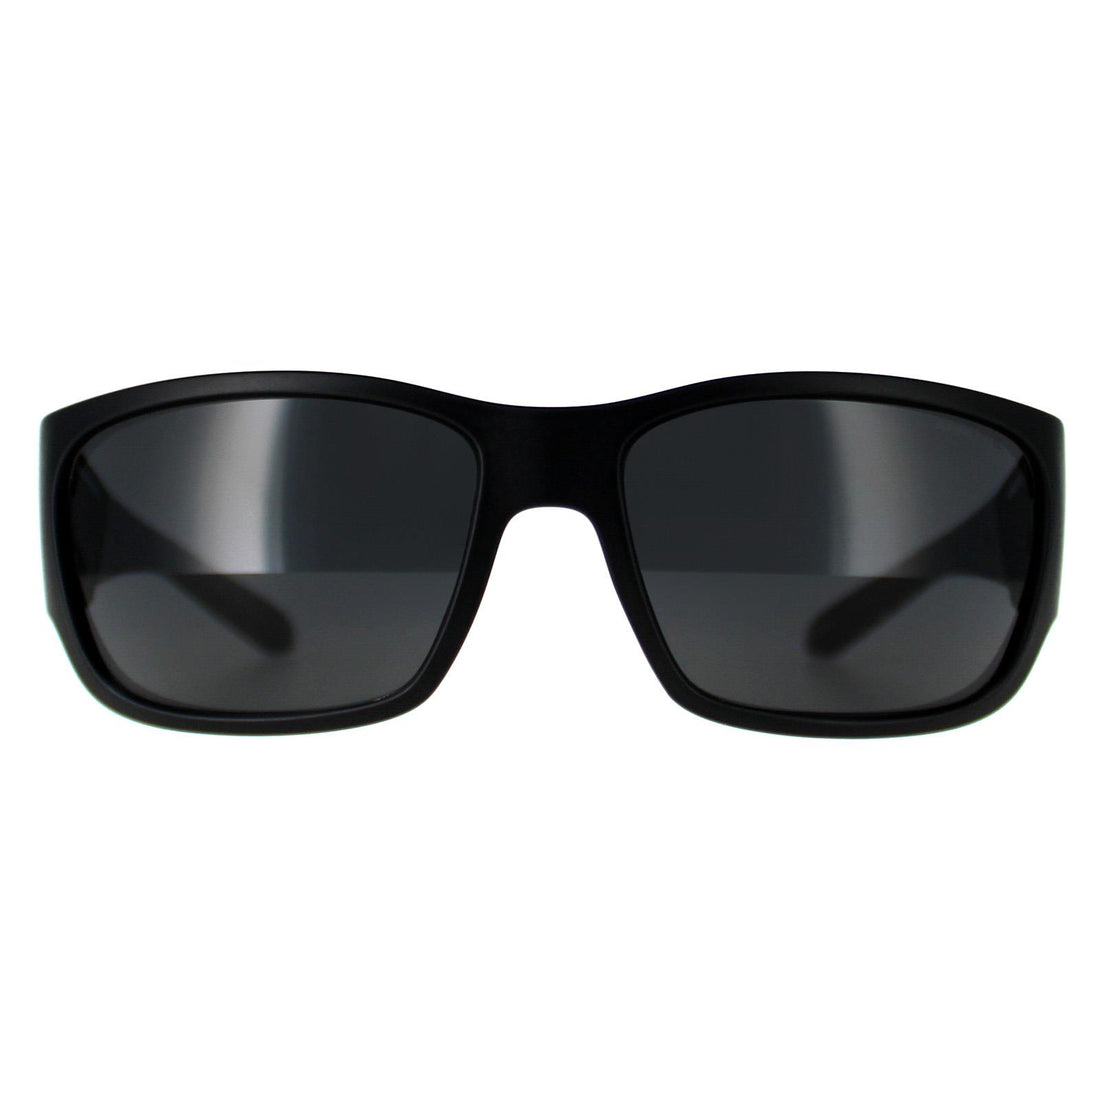 Arnette Sunglasses AN4324 Lil&